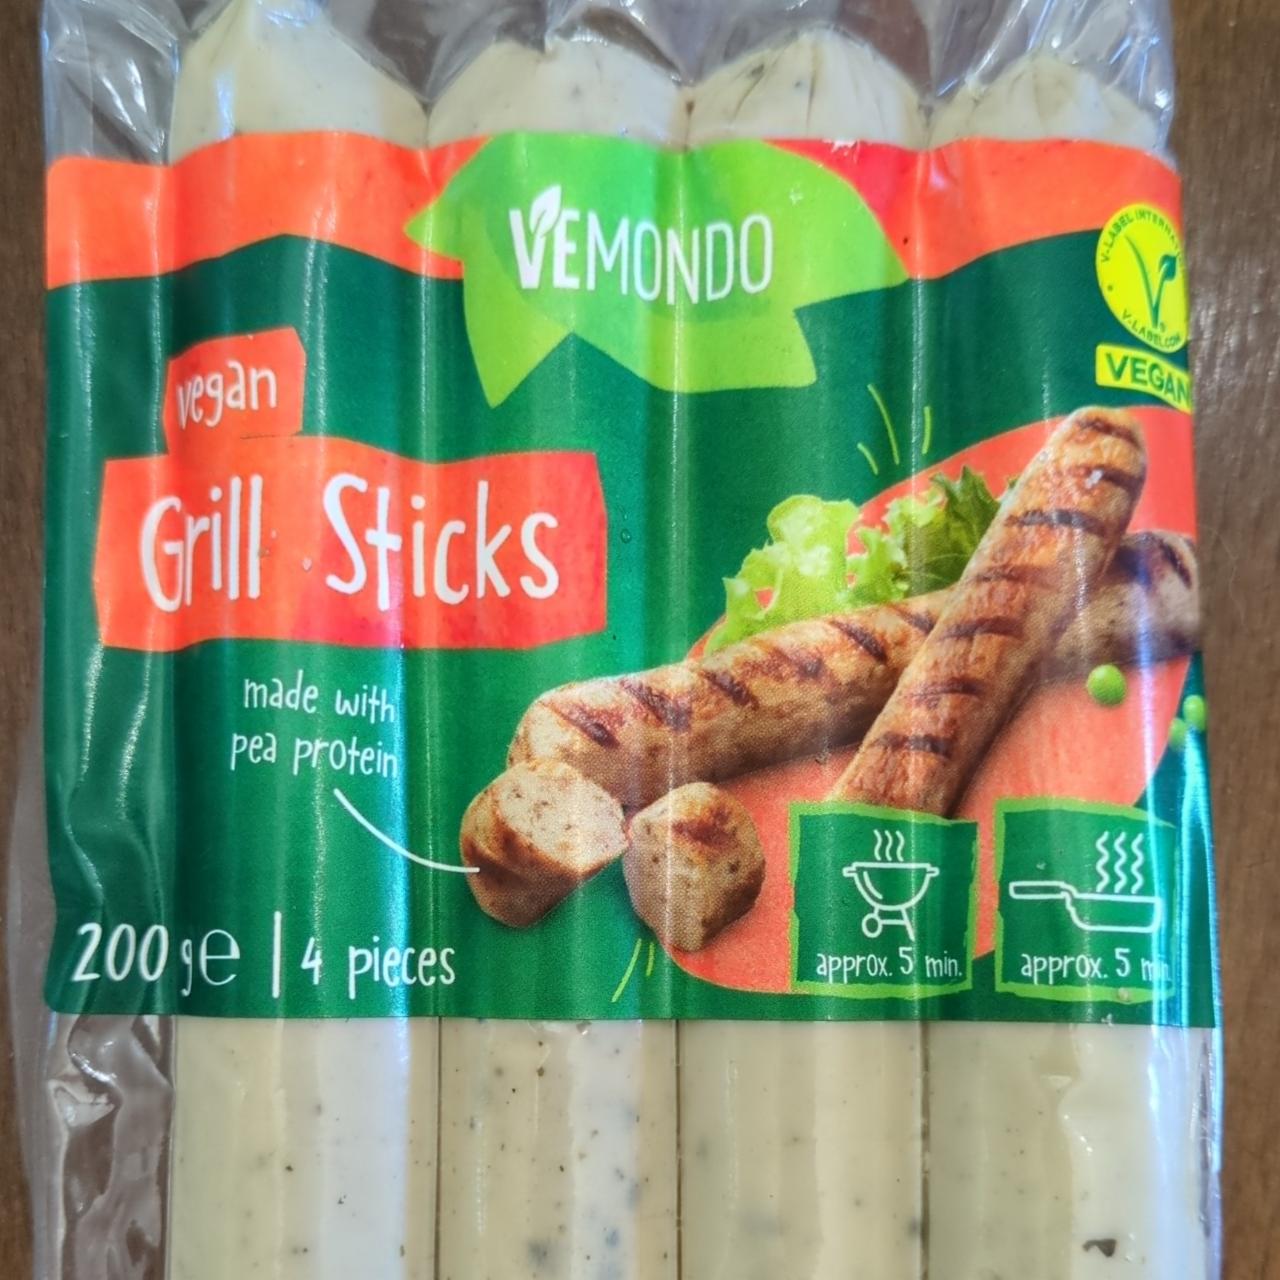 Képek - Vegan Grill Sticks Vemondo